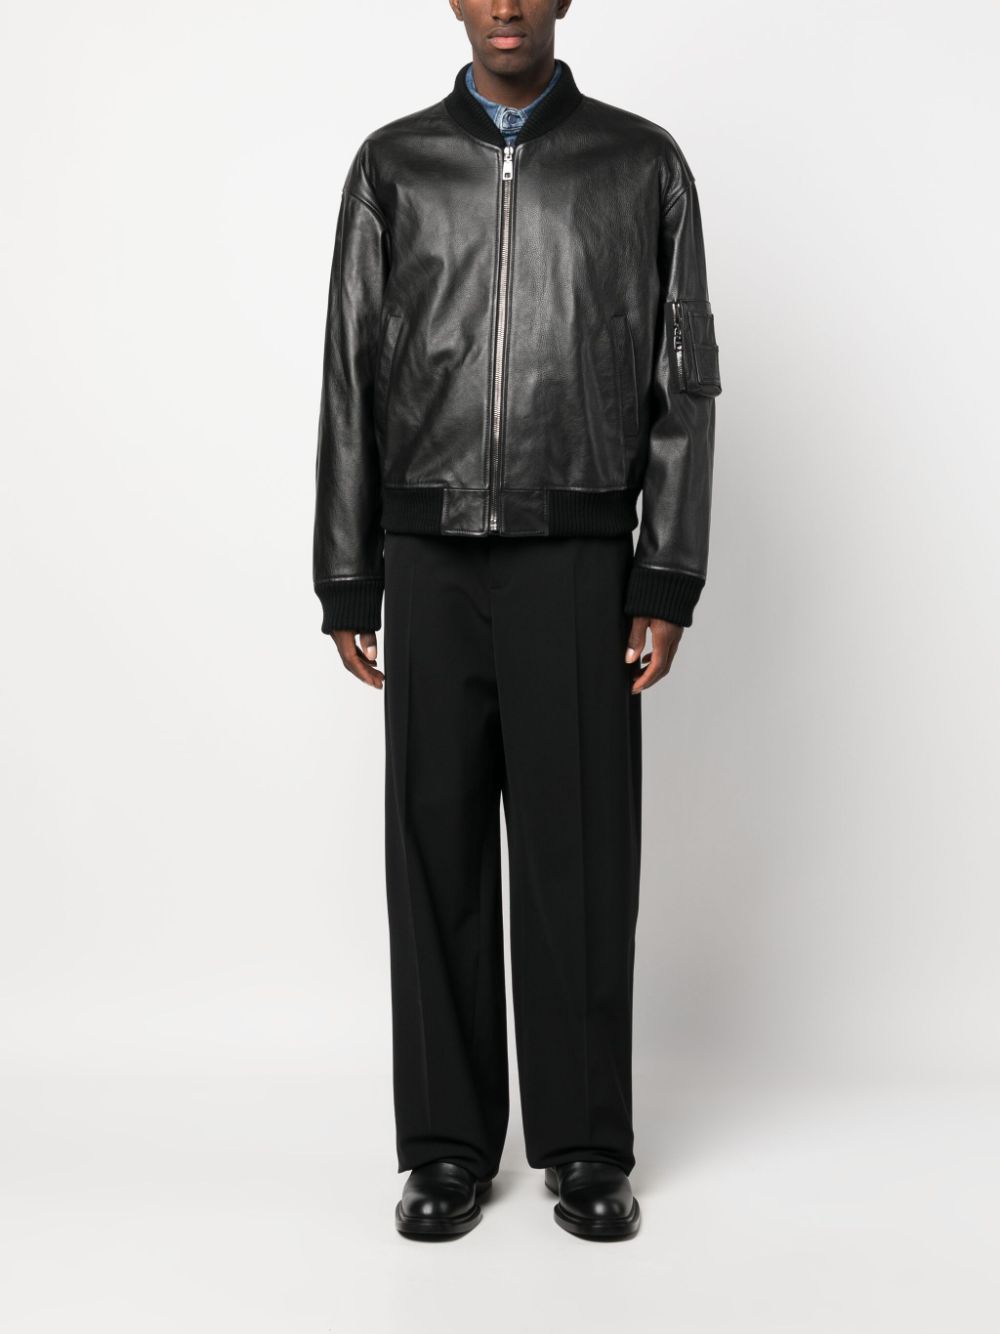 Dolce & Gabbana Leather zip-up Bomber Jacket - Farfetch